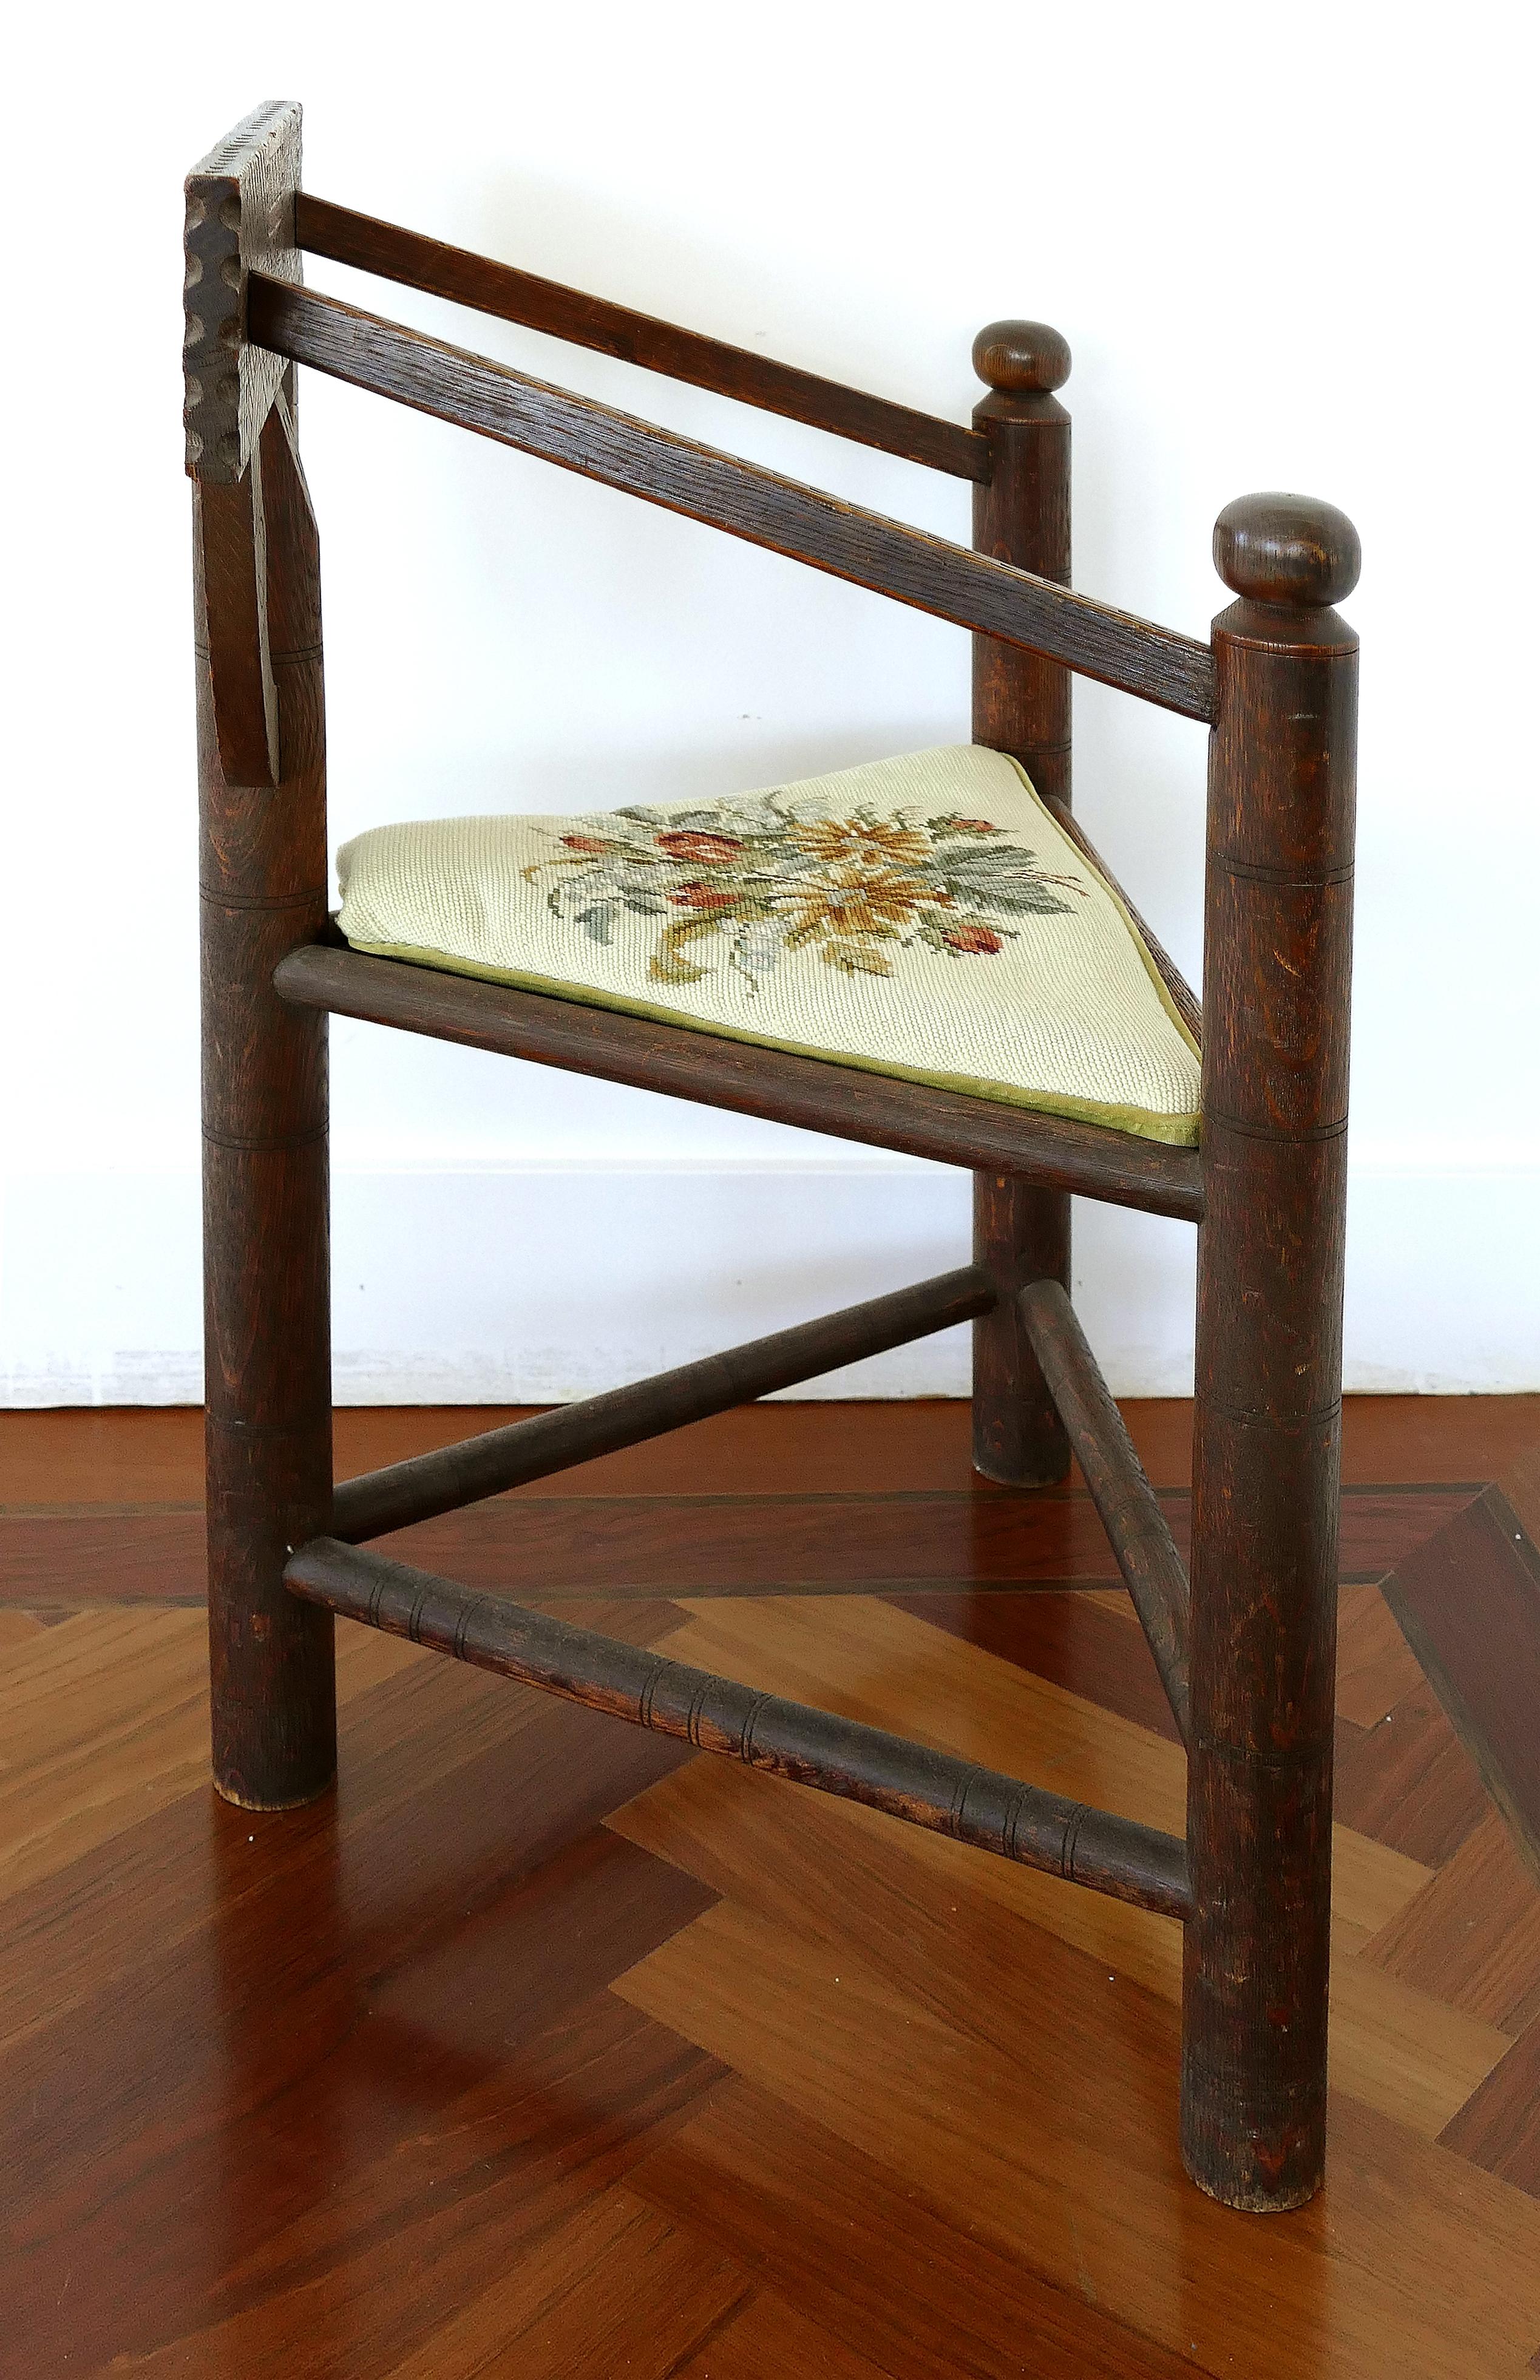 Aesthetic Movement 19th-Century Swedish Monk's Corner Chair with Needlepoint Cushion